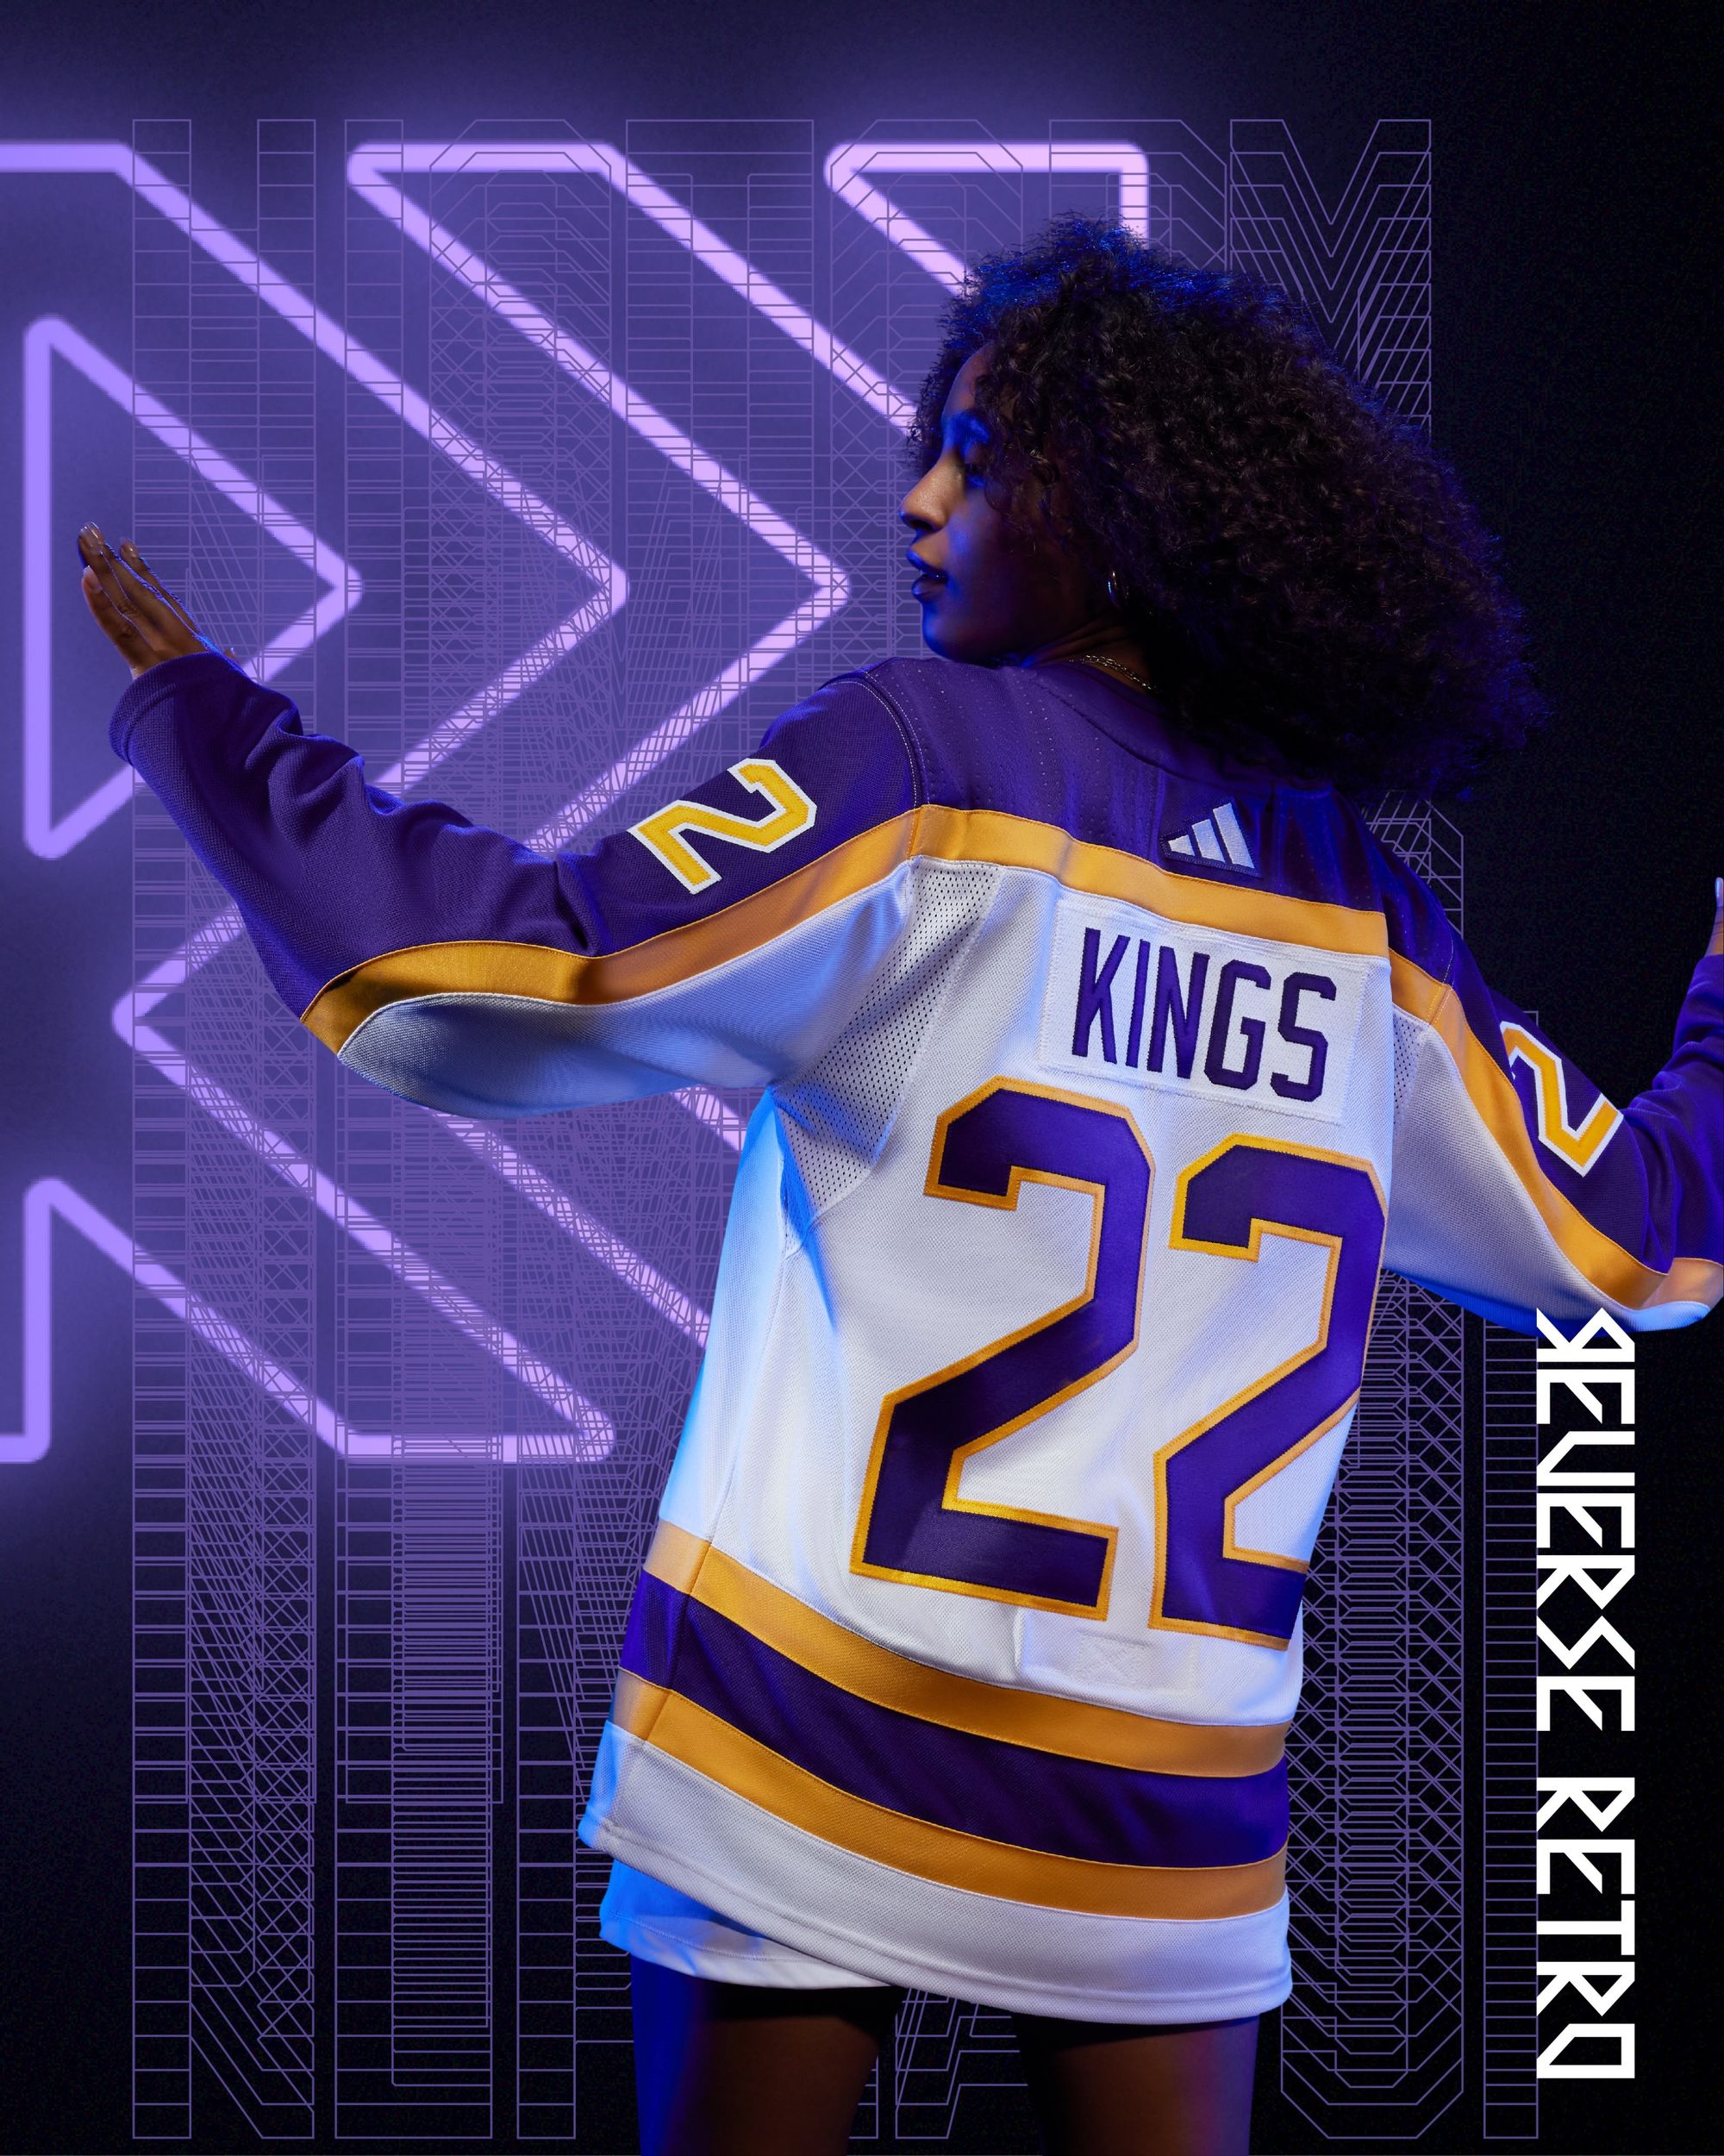 Rumor: Kings “reverse retro jersey” for next season has been leaked. -  HockeyFeed